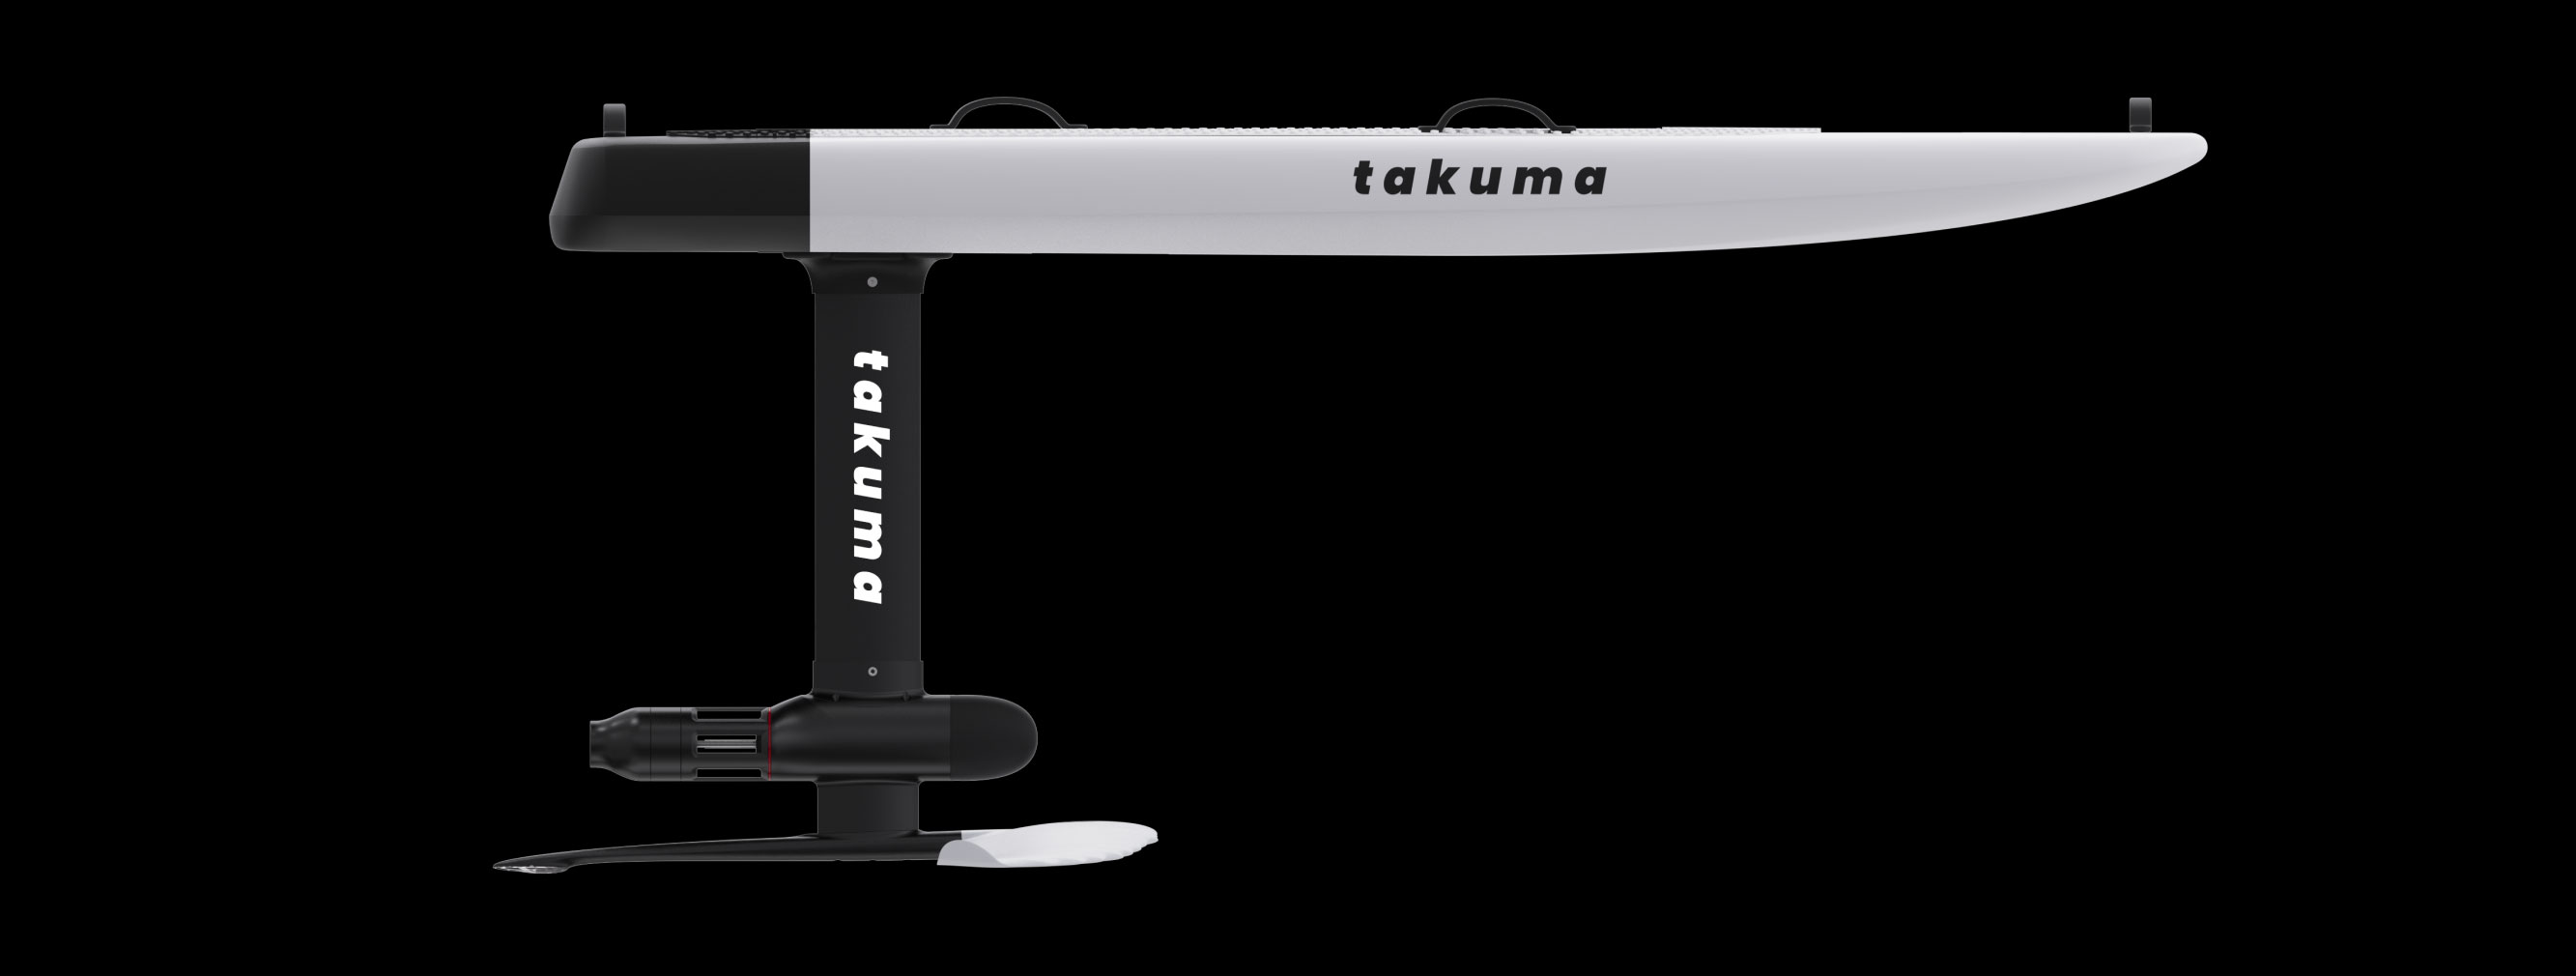 Takuma Efoil pack - side perspective